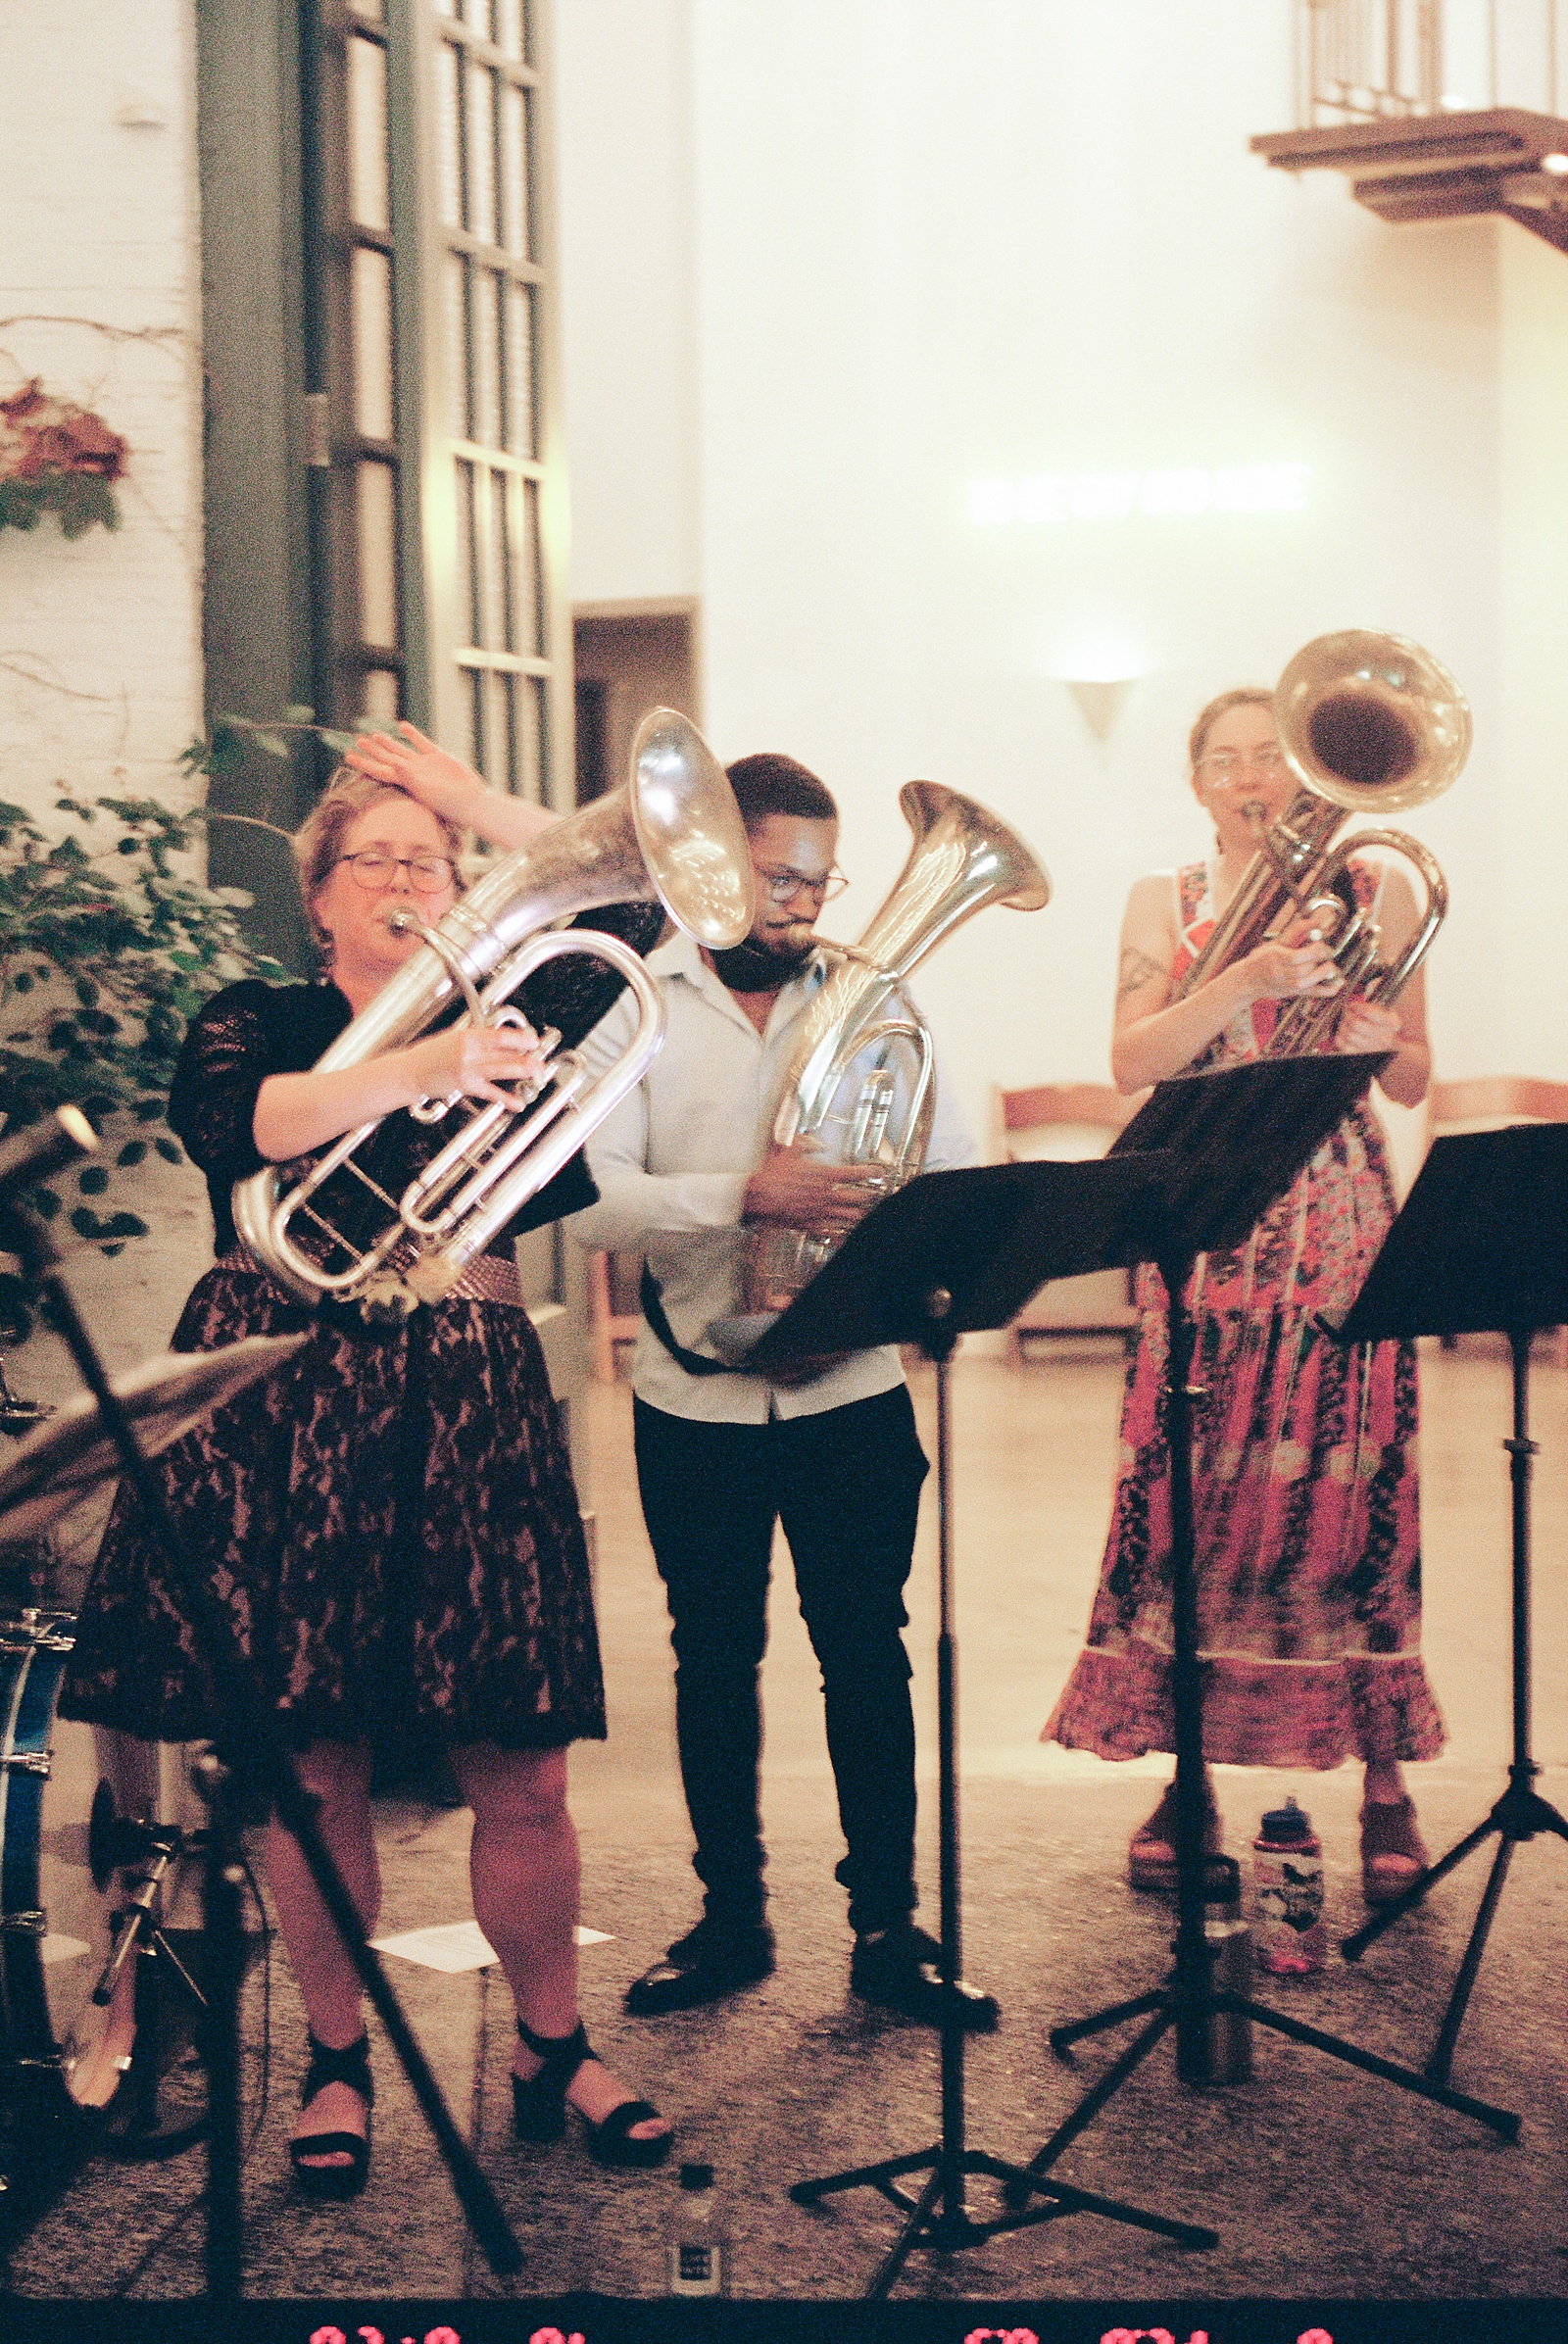 A wedding band plays brass instruments at a Philadelphia wedding venue courtyard.